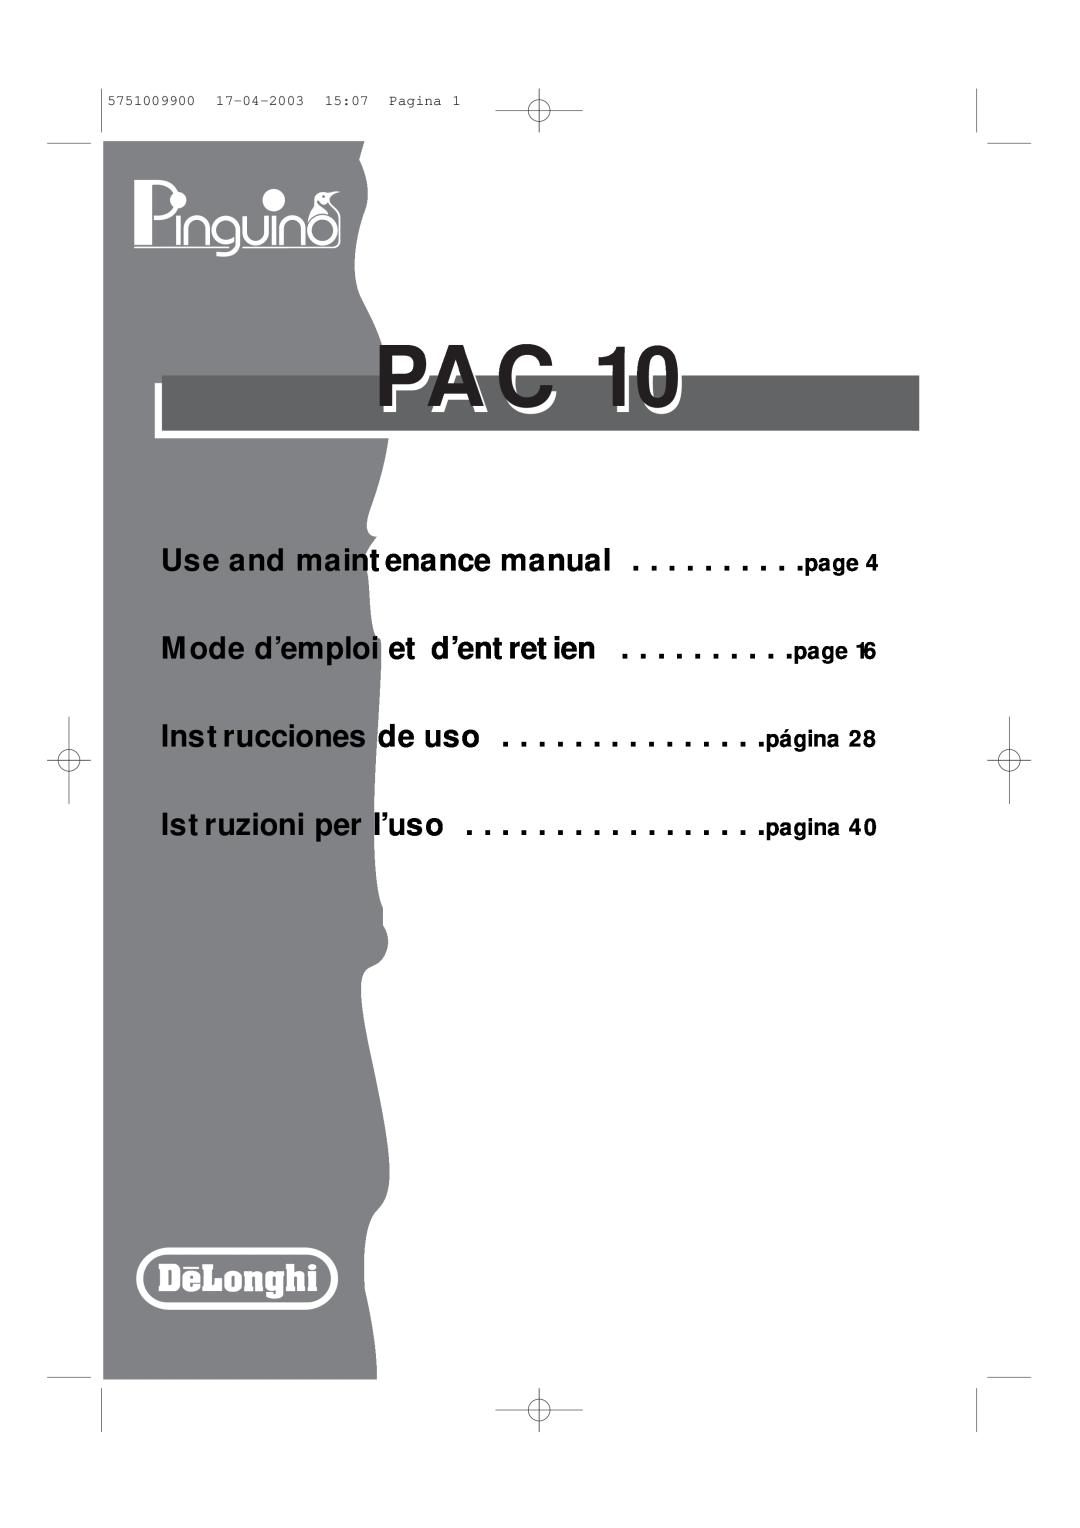 DeLonghi Pac 1000 manual 5751009900 17-04-200315 07 Pagina 